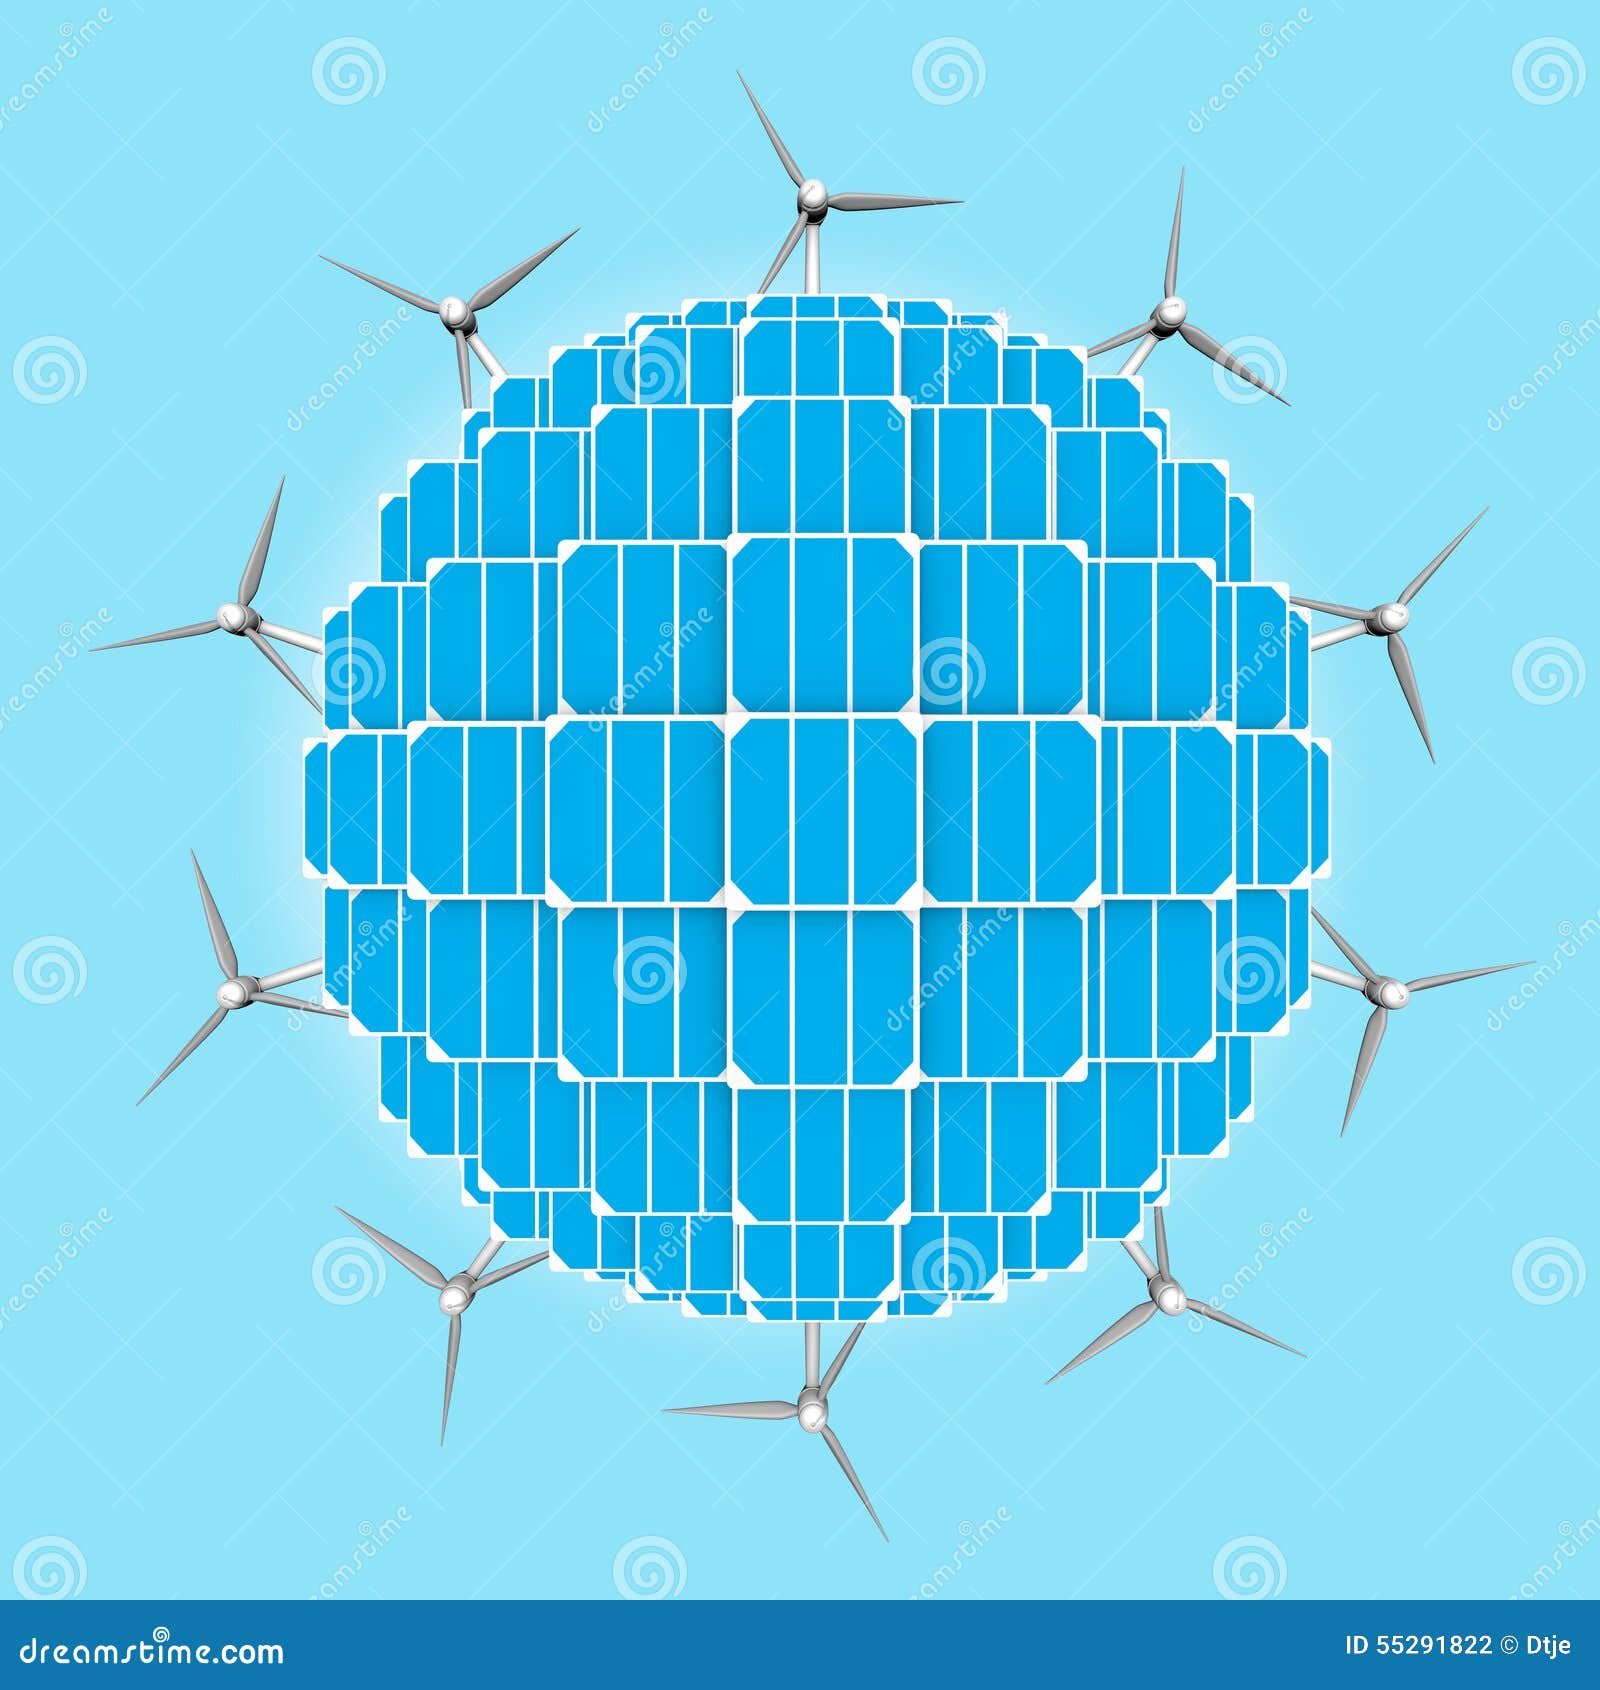 planet, solar panels,wind turbines generalizing clean energies